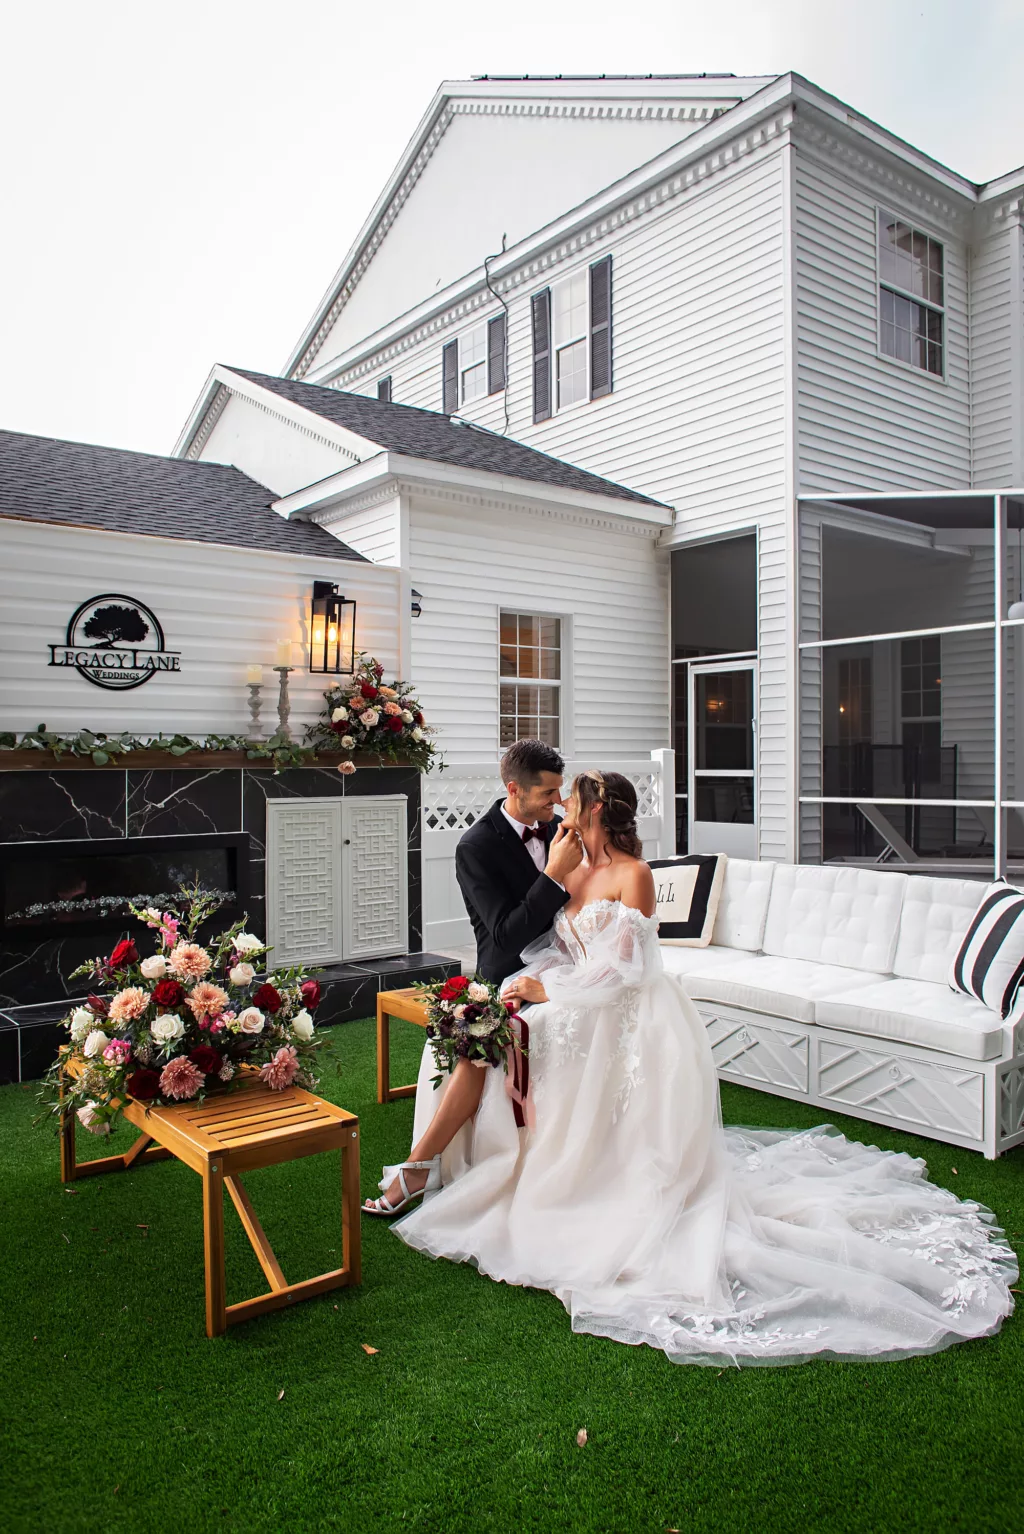 Bride and Groom Cocktail Hour Celebration | Tampa Private Estate Wedding Venue Legacy Lane Weddings